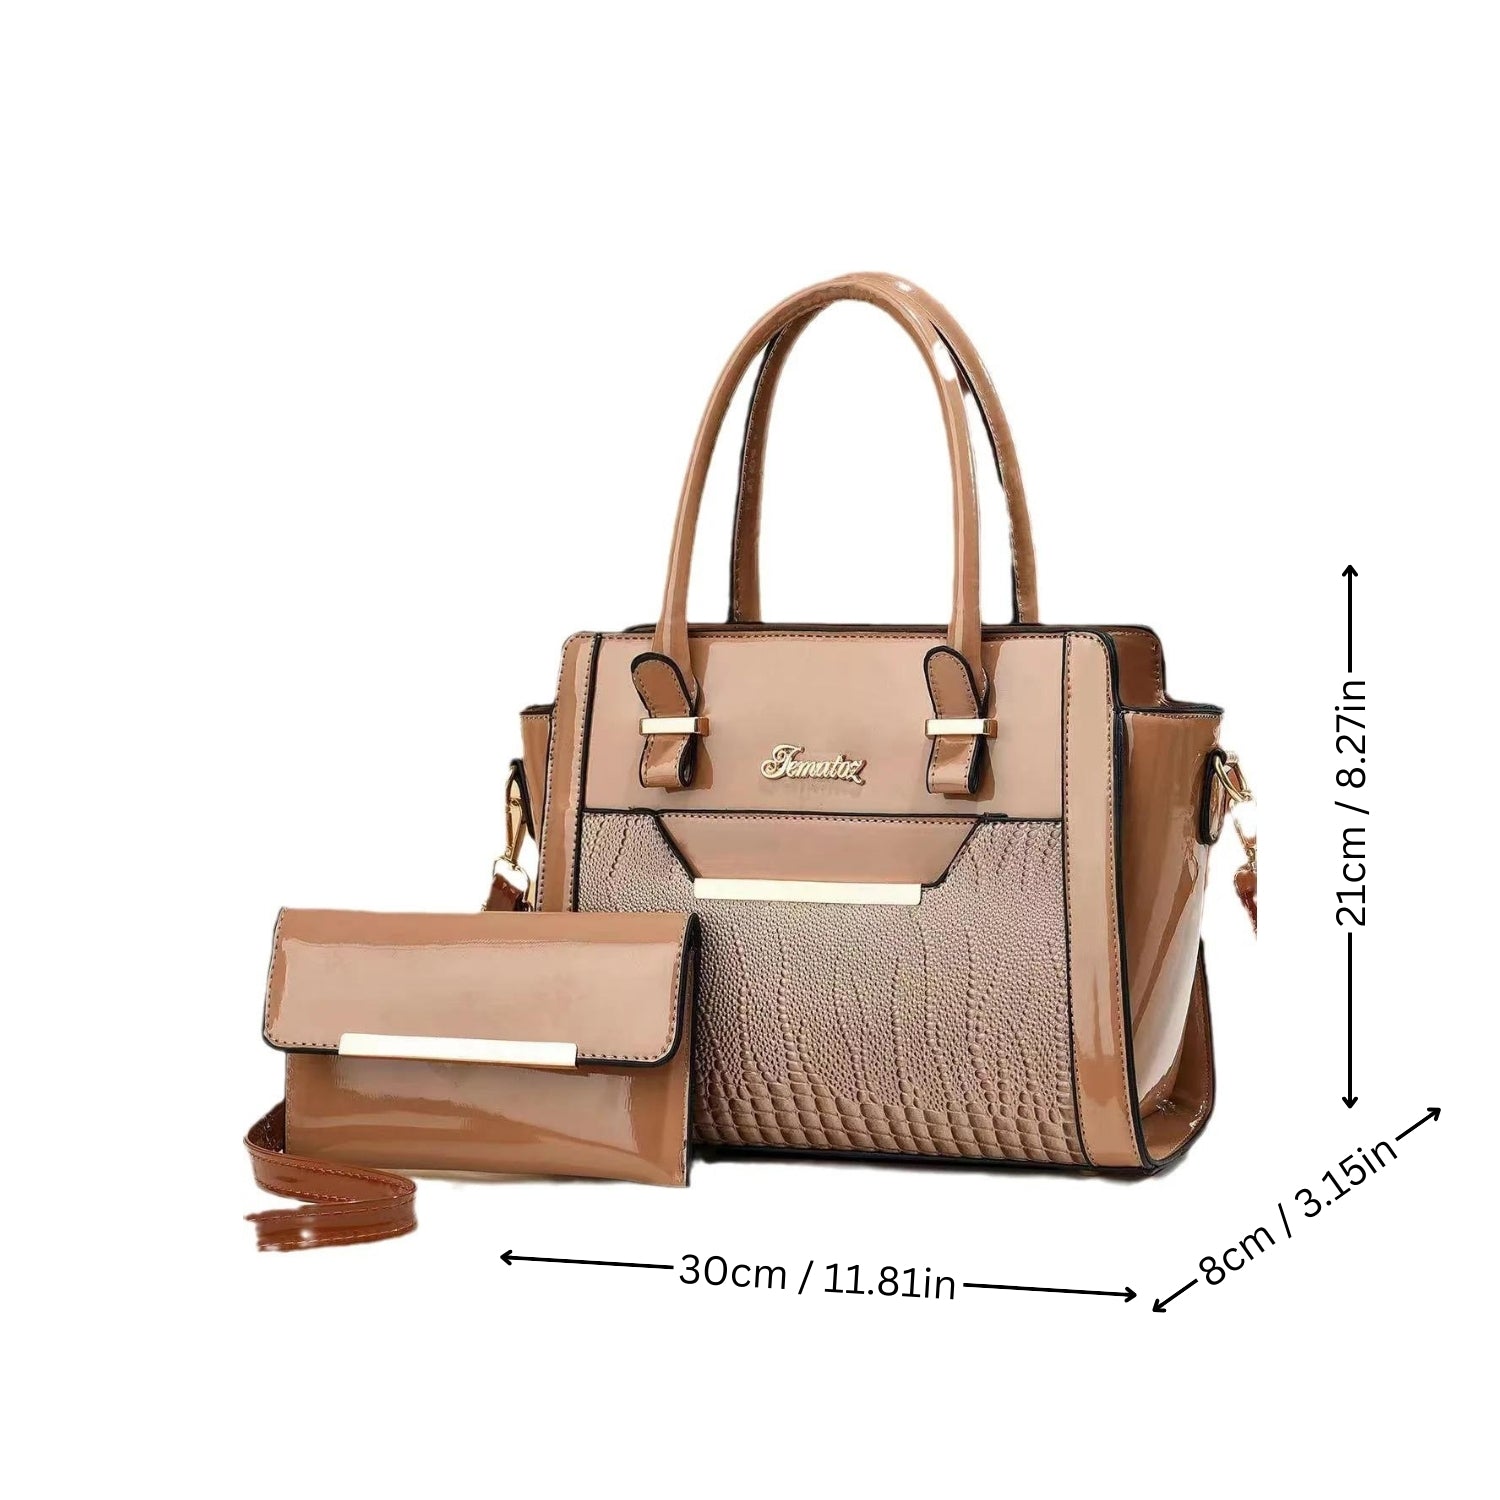 Chic Crocodile Pattern Tote Bag Set – Fashionable PU Leather Shoulder Bag